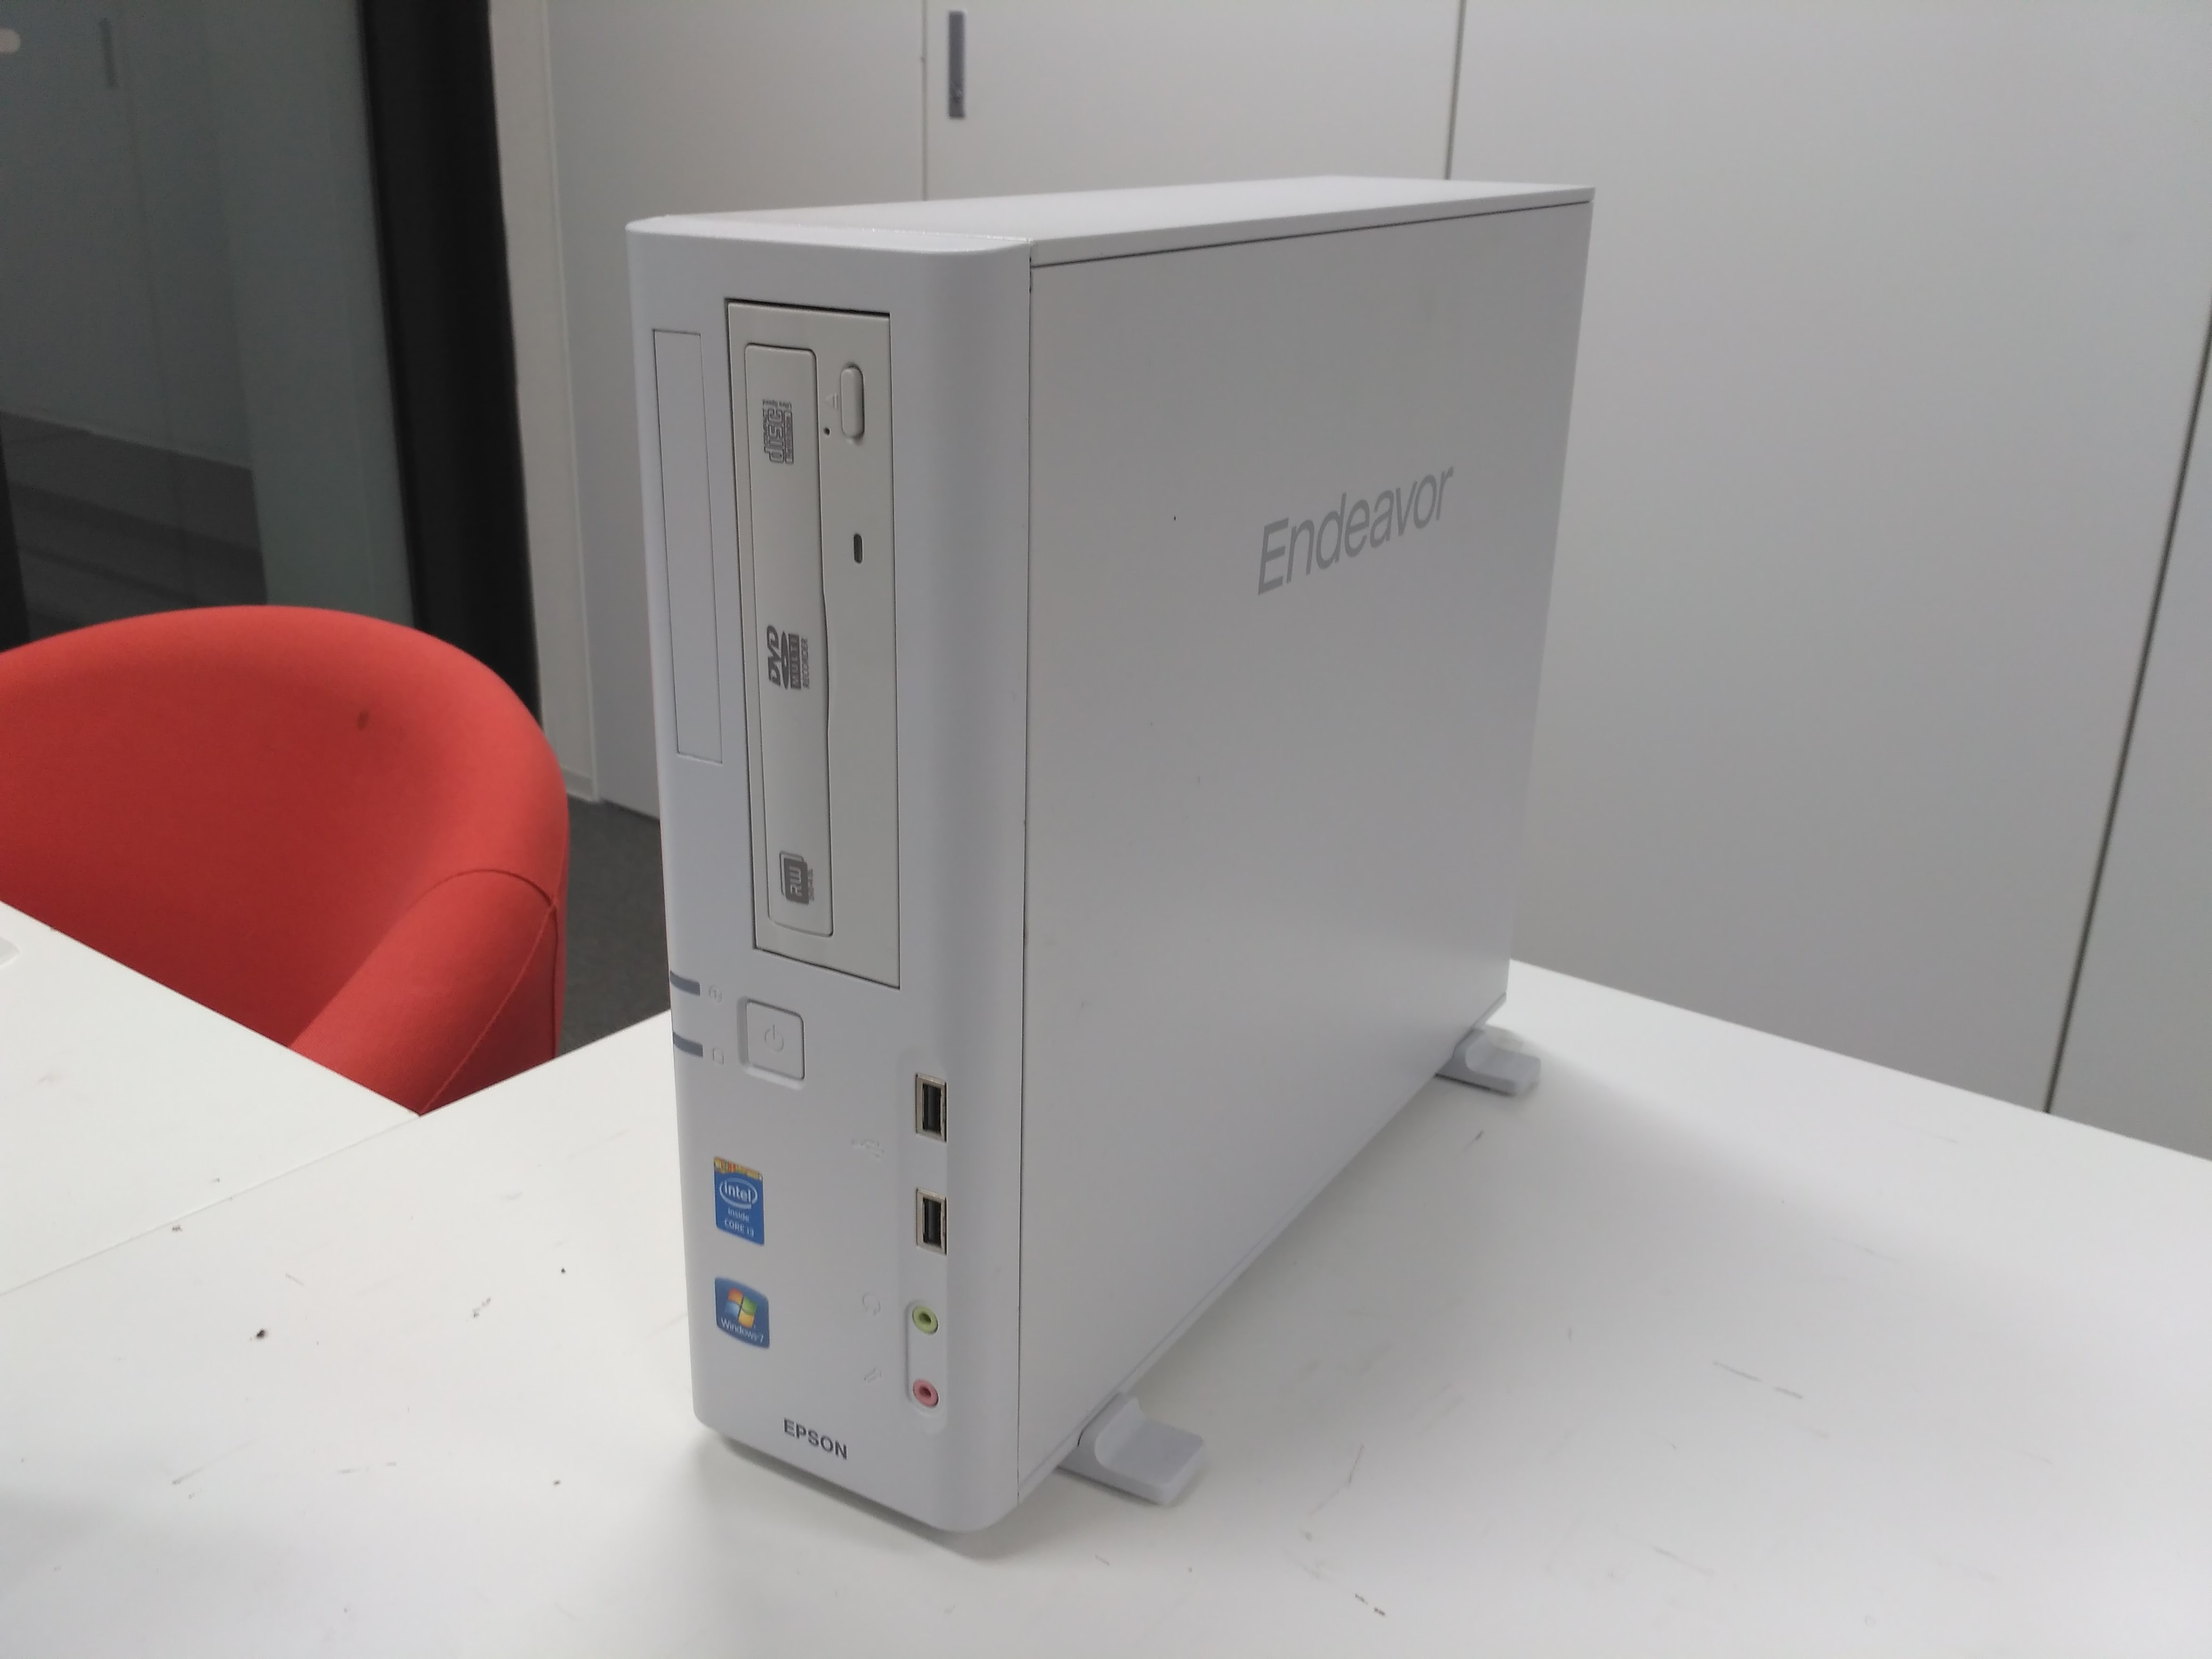 EPSON Endever AT992E 電源入るがWindowsが起動しない HDD故障 | パソコン修理・データ復旧 PC Fixs